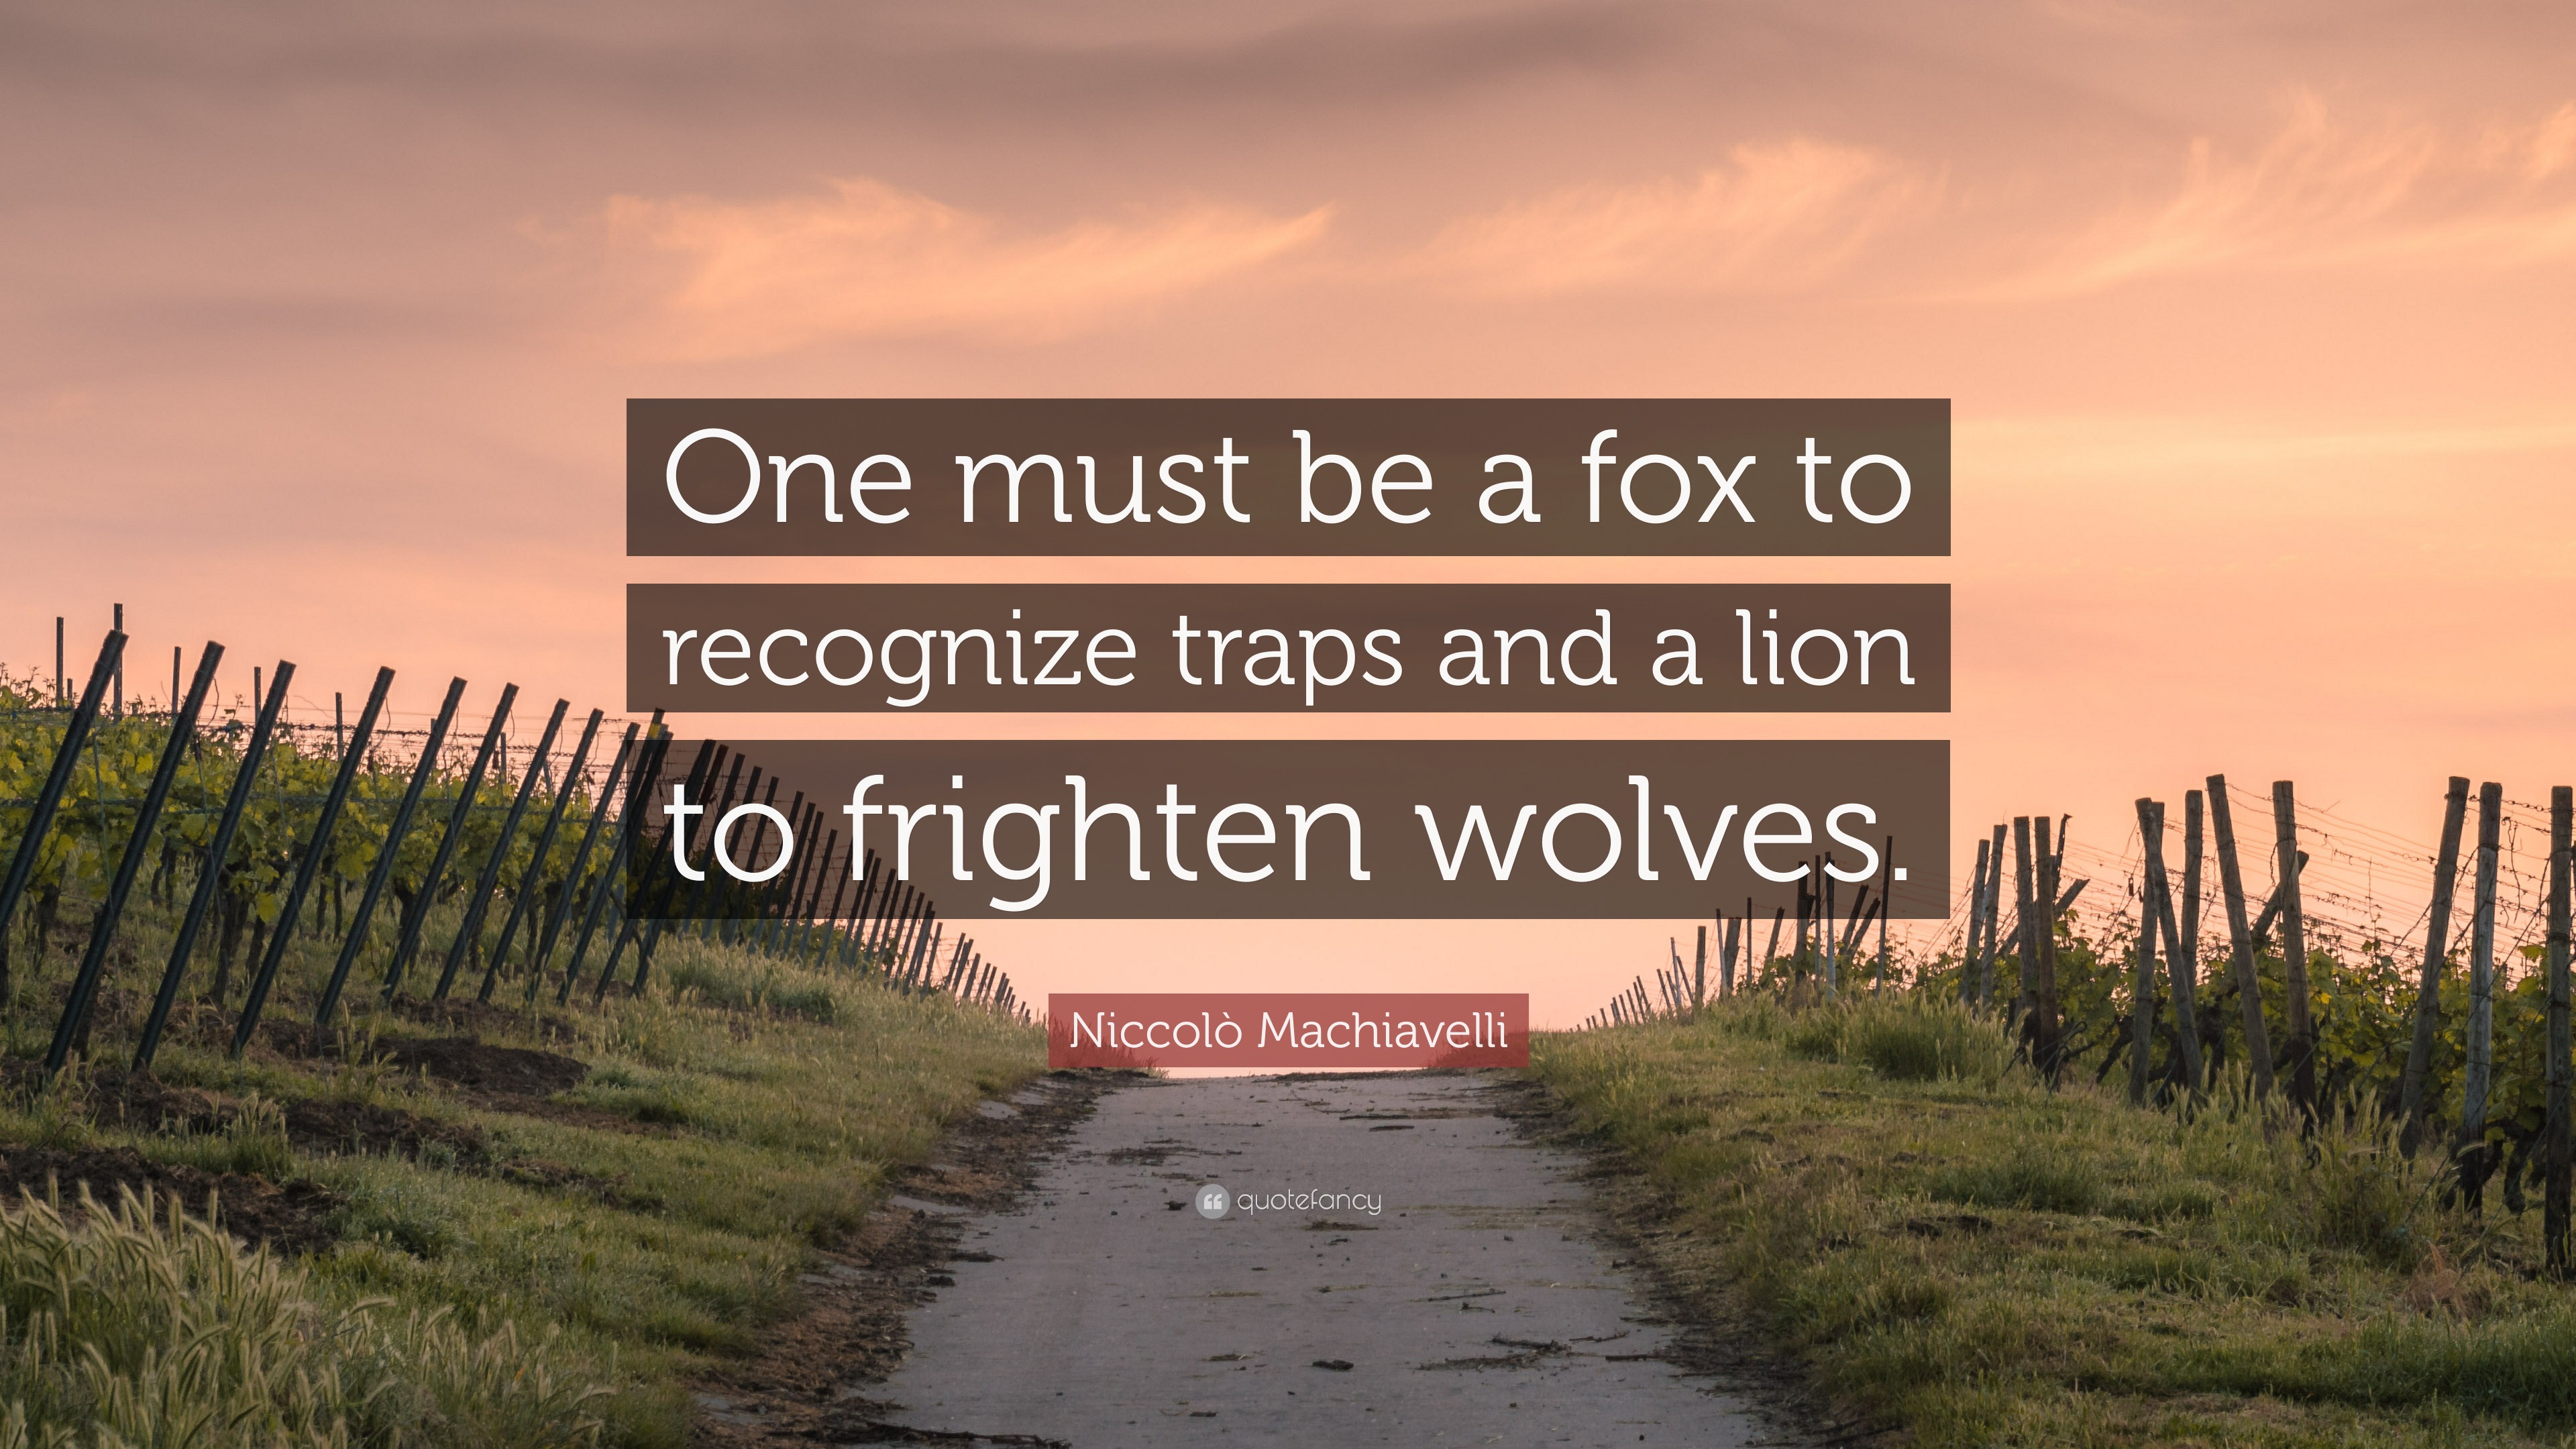 be like the fox machiavelli in his world